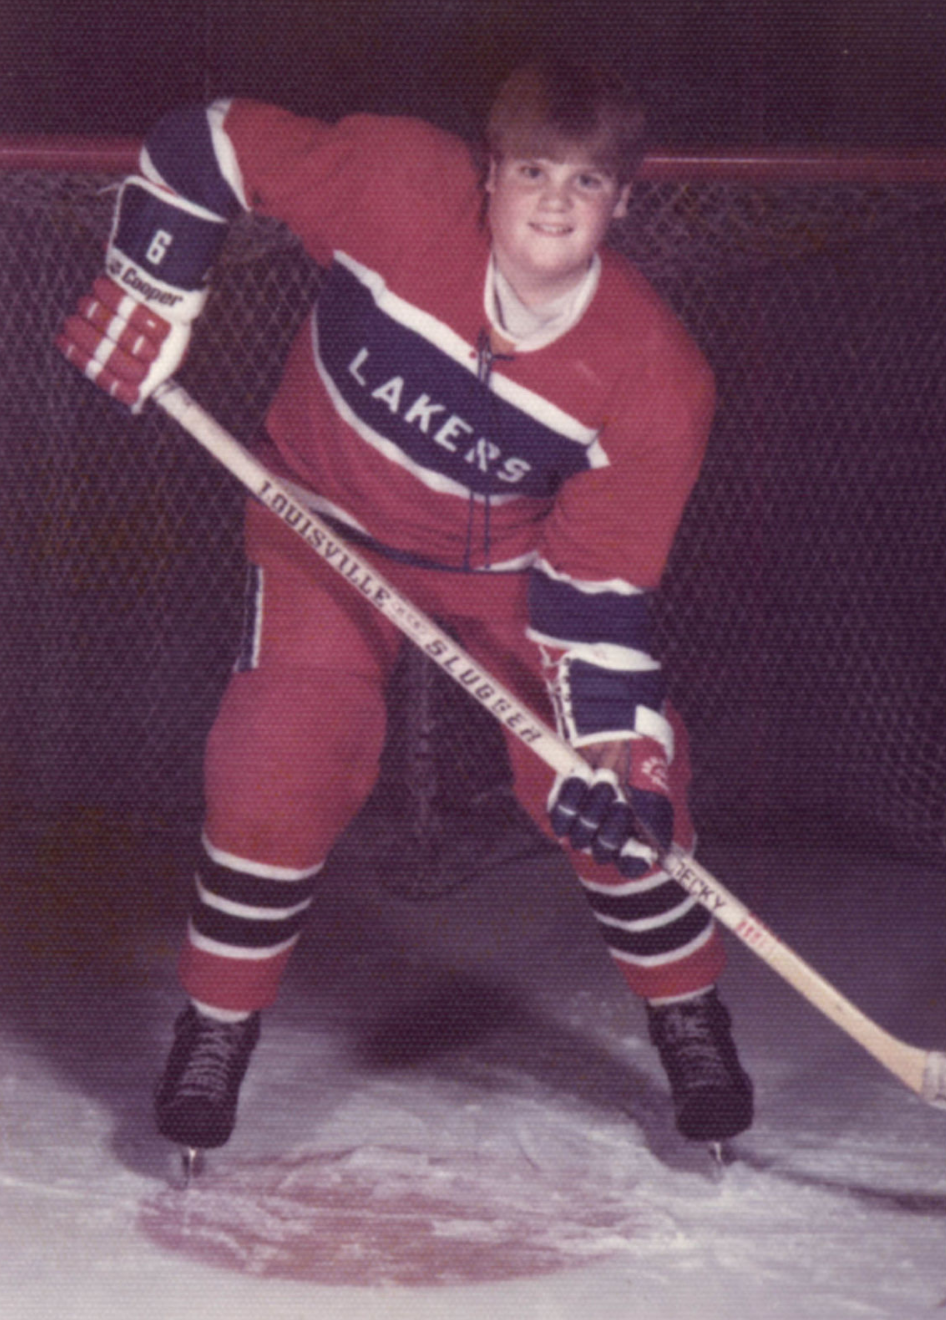 Chris Farley as a Teenage Ice Hockey Player 1970s HockeyGods